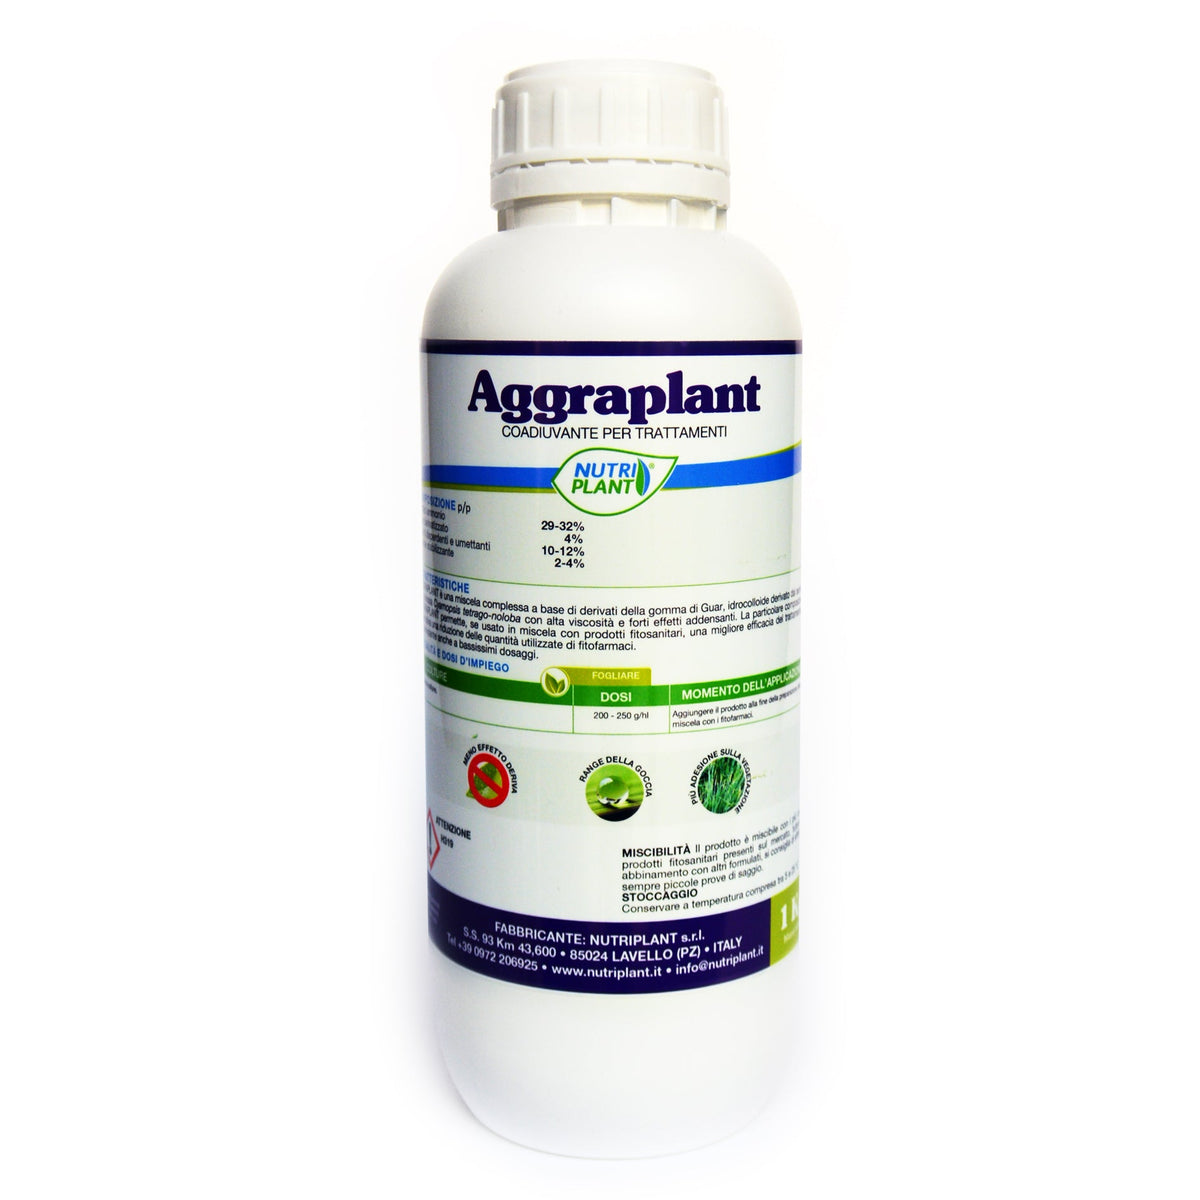 Aggrapplant coadiuvante aggrappante-Ecanshop